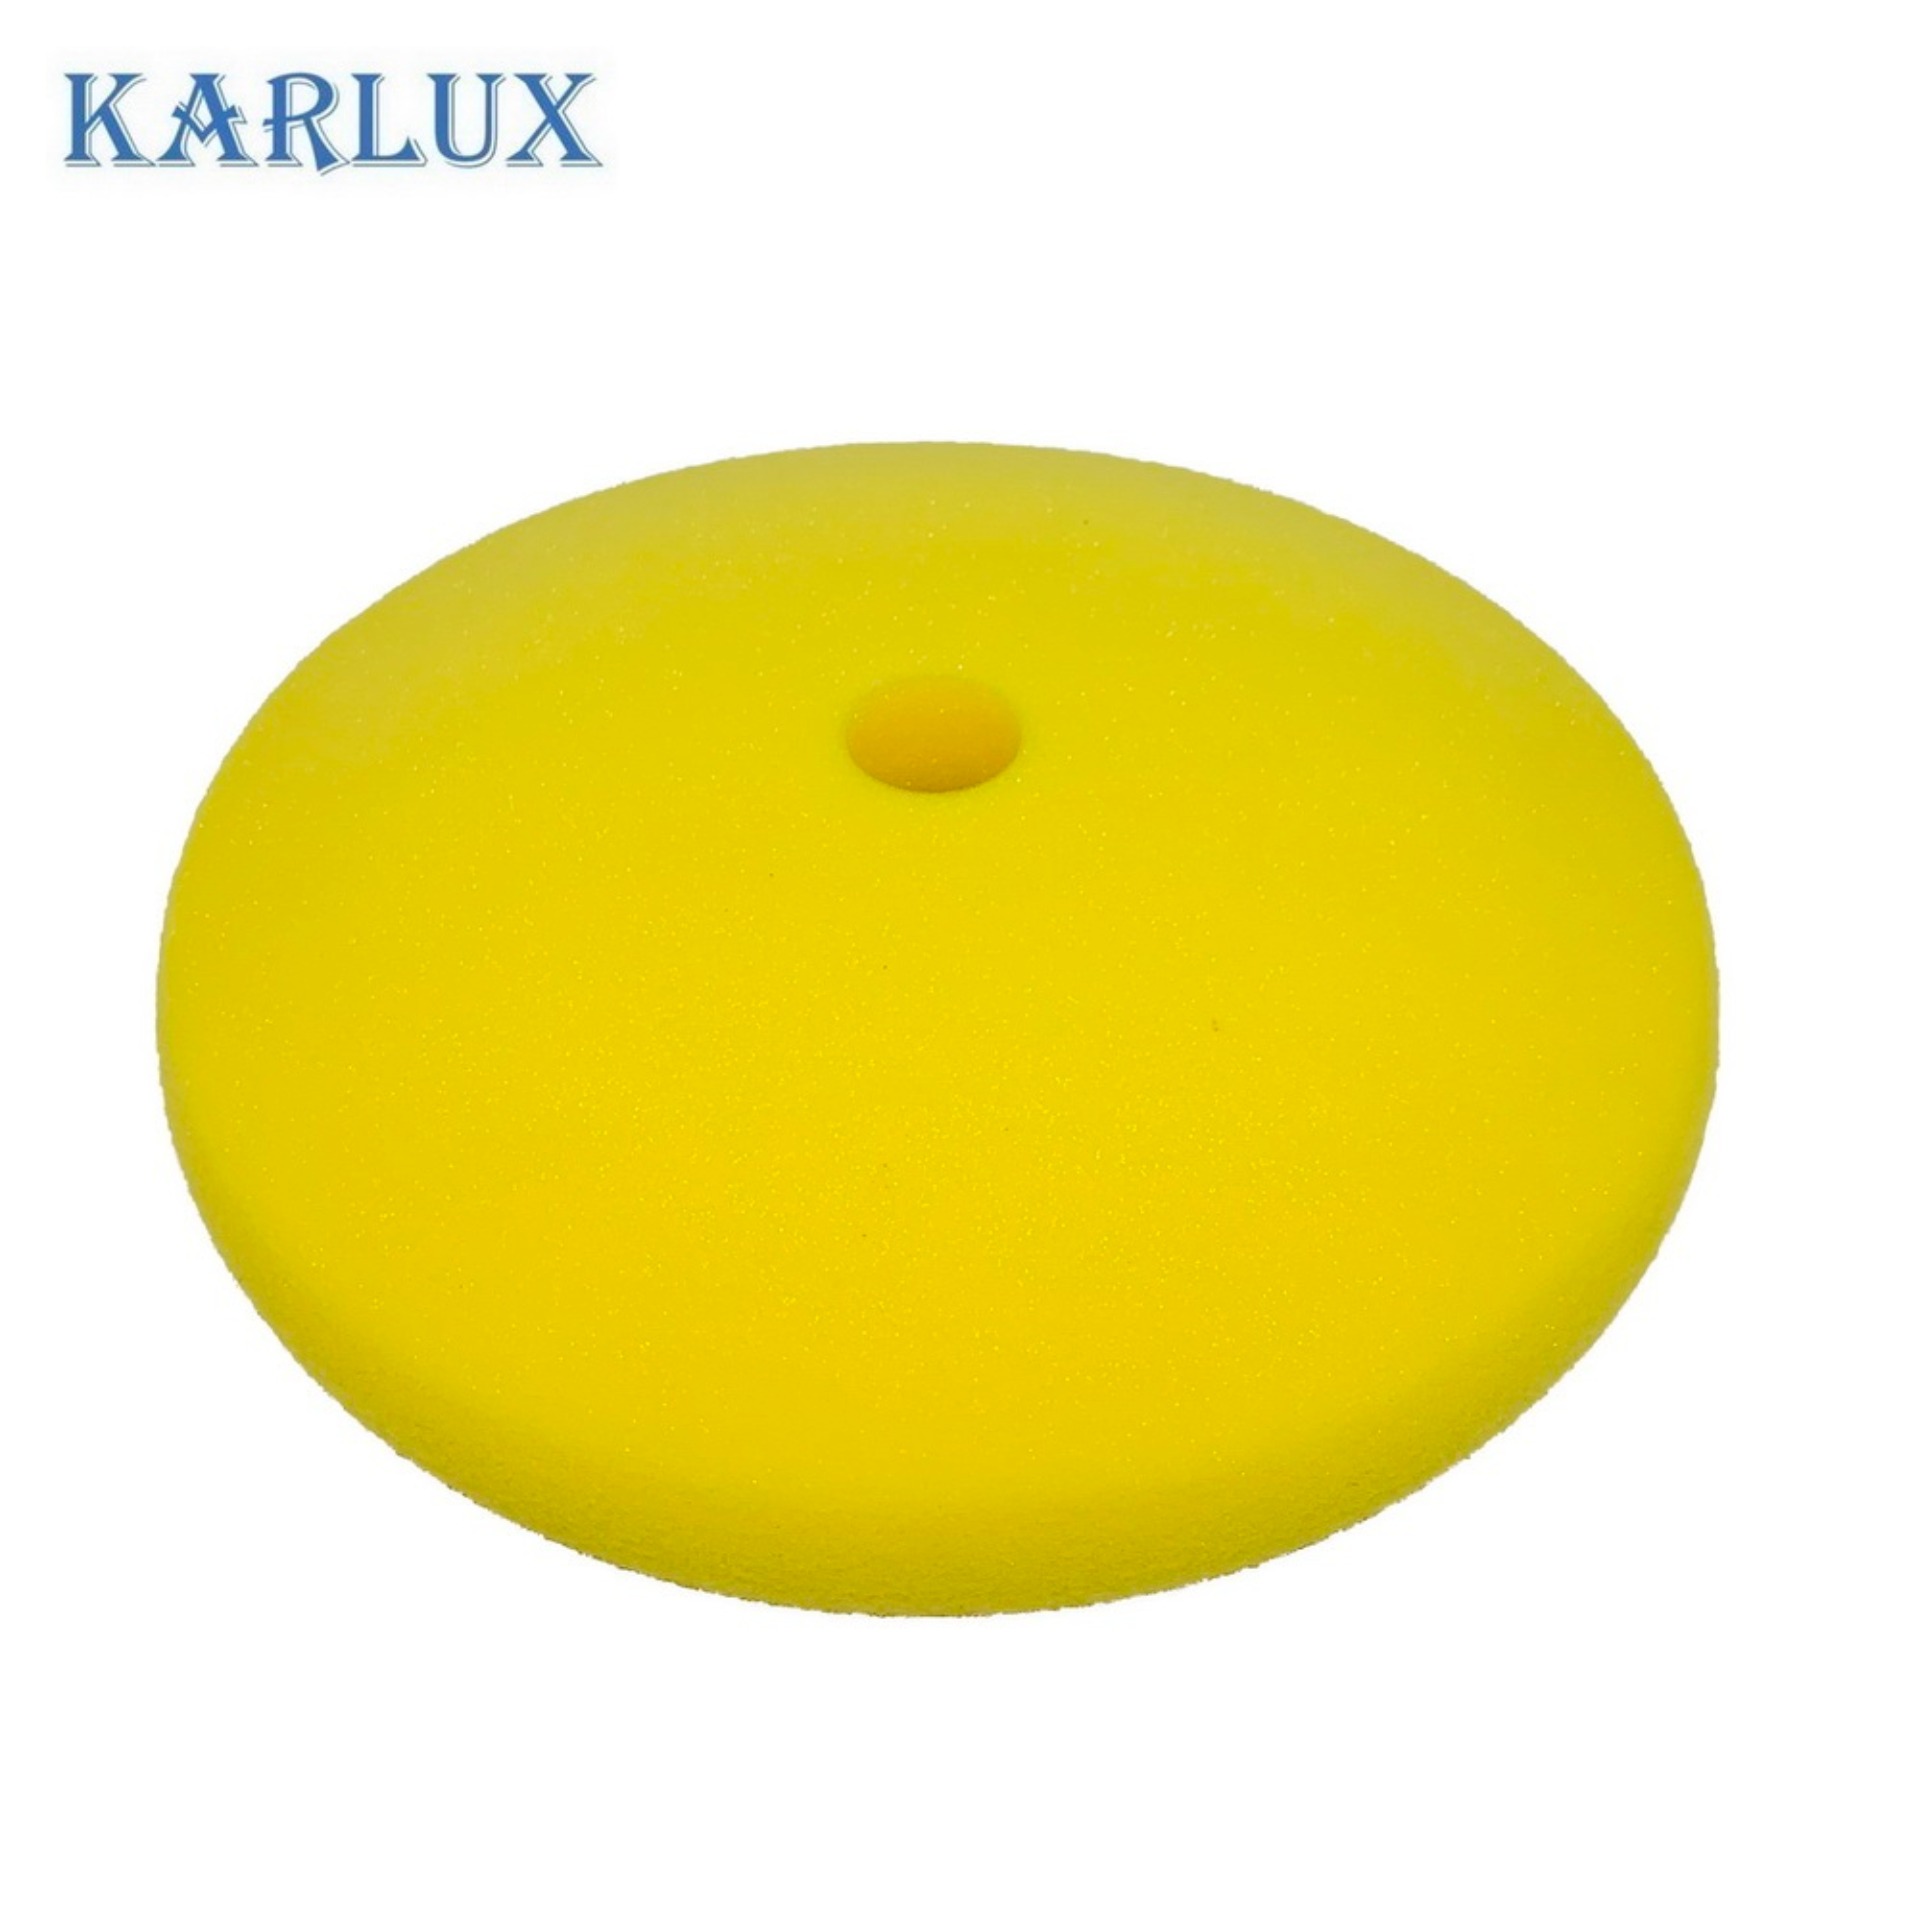 Karlux BUFFING FOAM ฟองน้ำเหลือง ขัดหยาบ 8นิ้ว แบบเรียบ (ใช้กับแป้นจับขนาด 7นิ้ว)